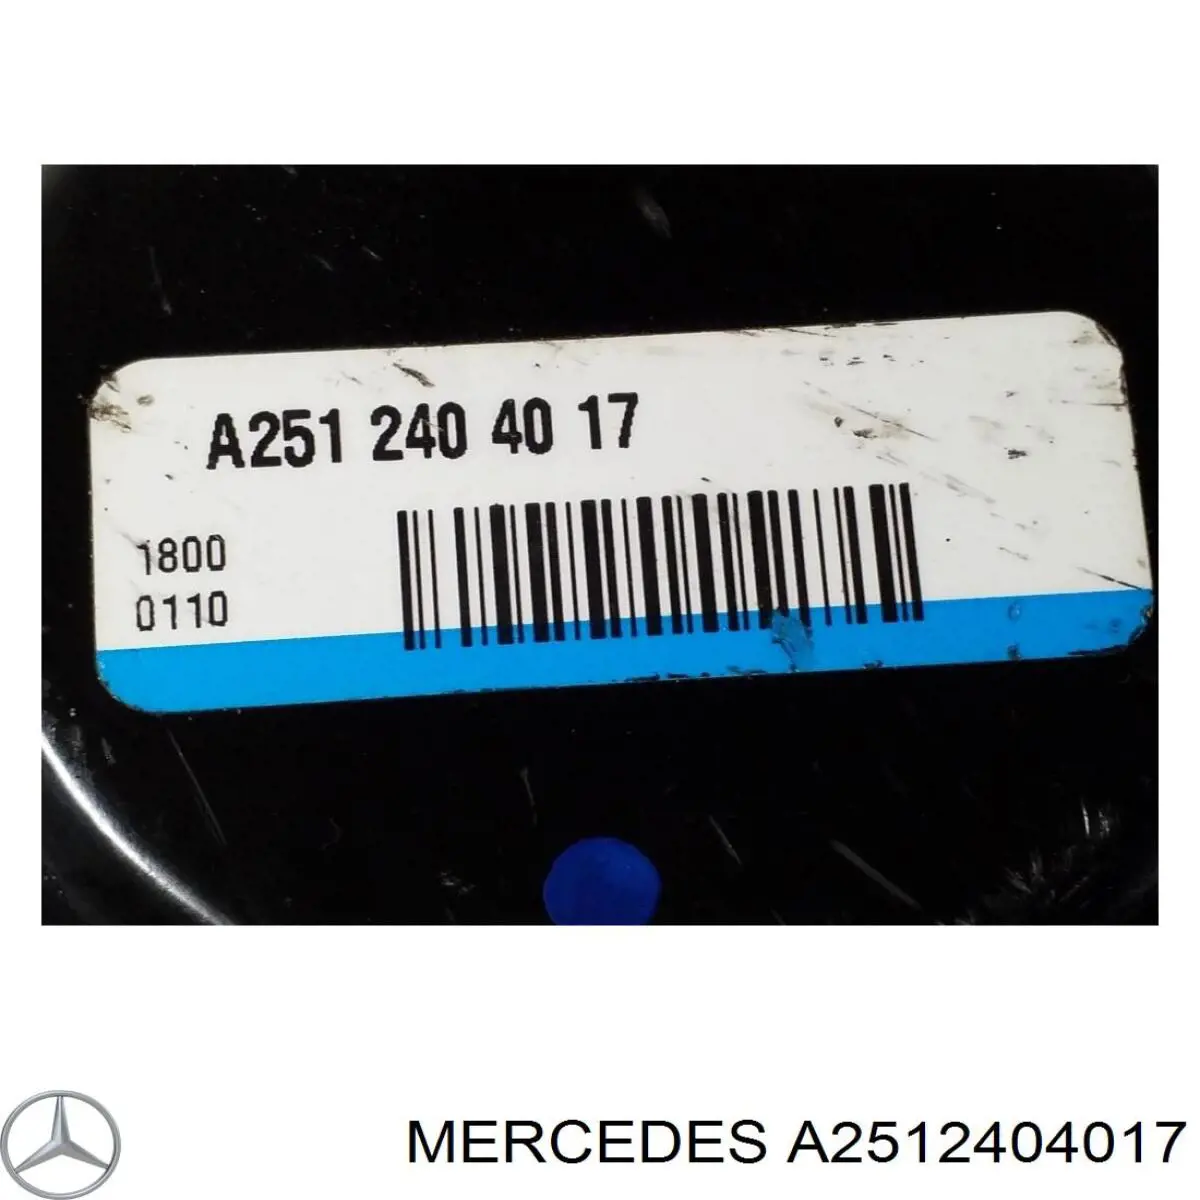 A2512404017 Mercedes soporte de motor, izquierda / derecha